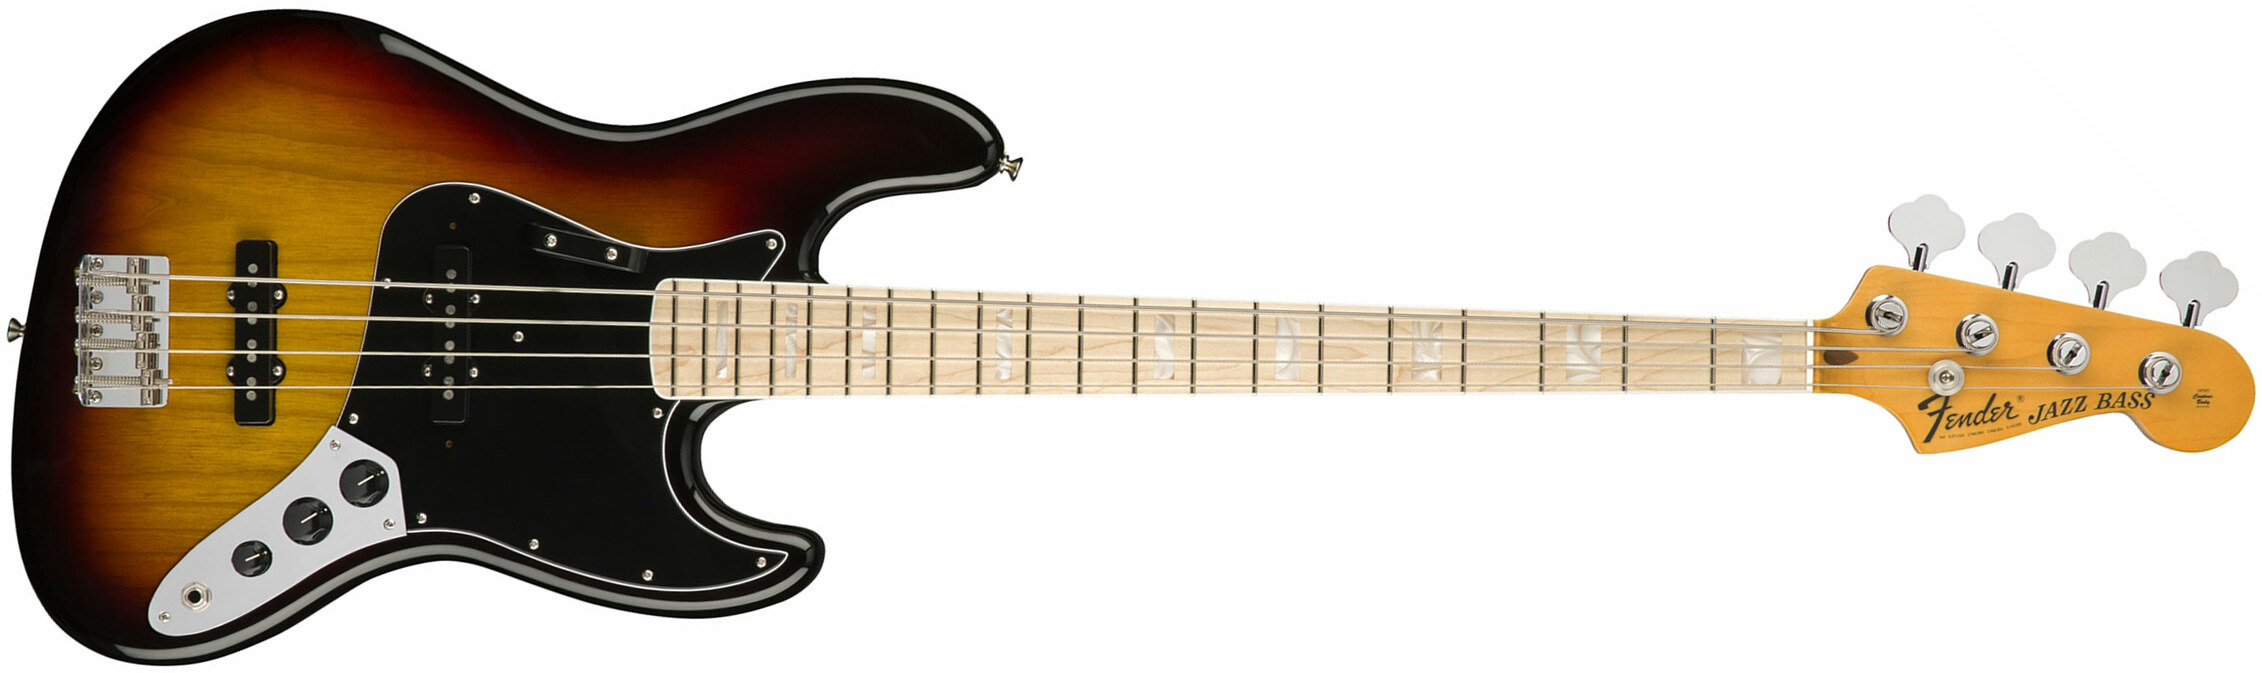 Fender Jazz Bass '70s American Original Usa Mn - 3-color Sunburst - Solid body elektrische bas - Main picture